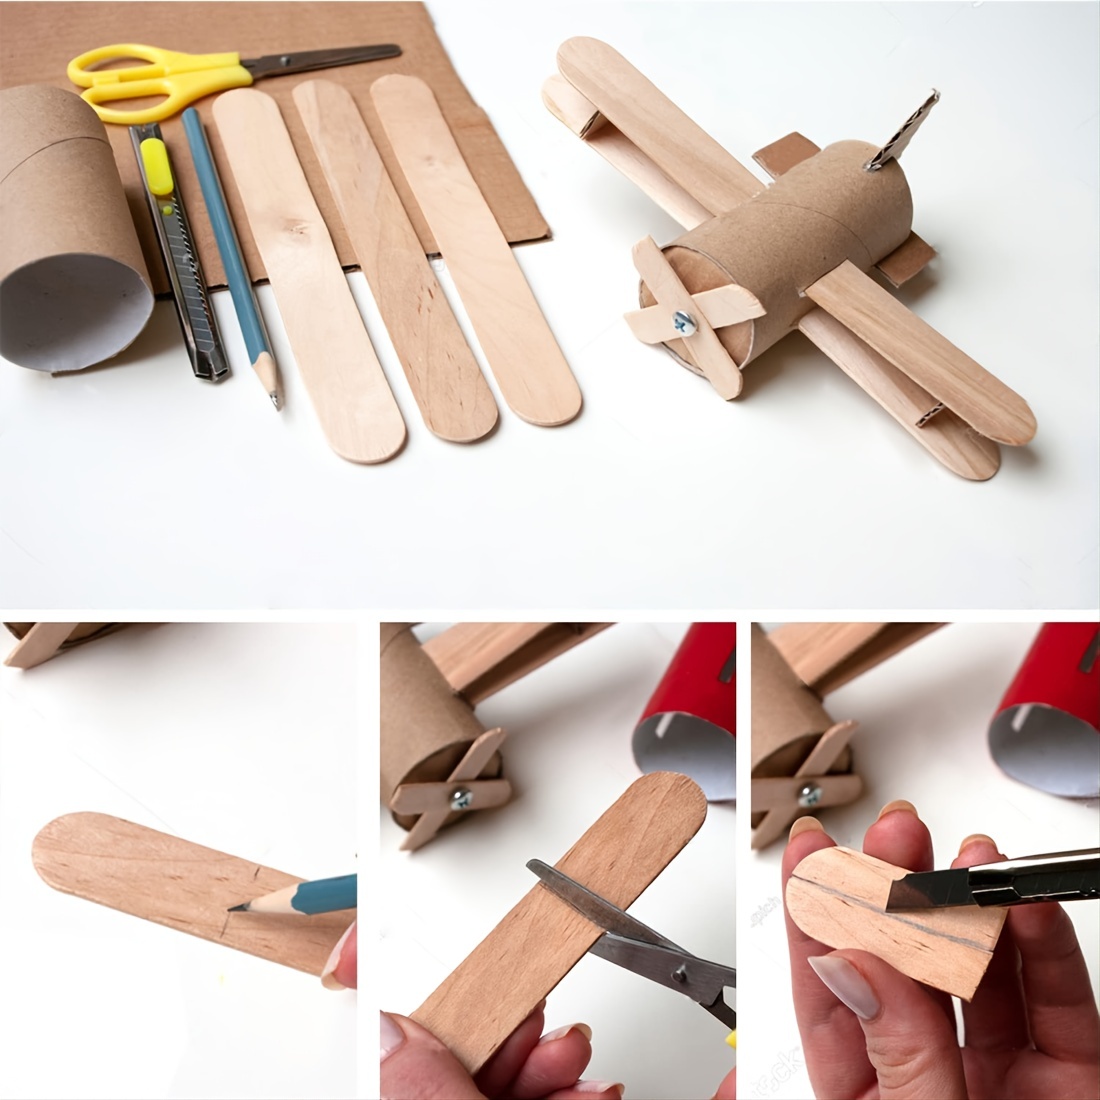 Wooden Craft Sticks Wooden Popsicle Craft Sticks Treat - Temu